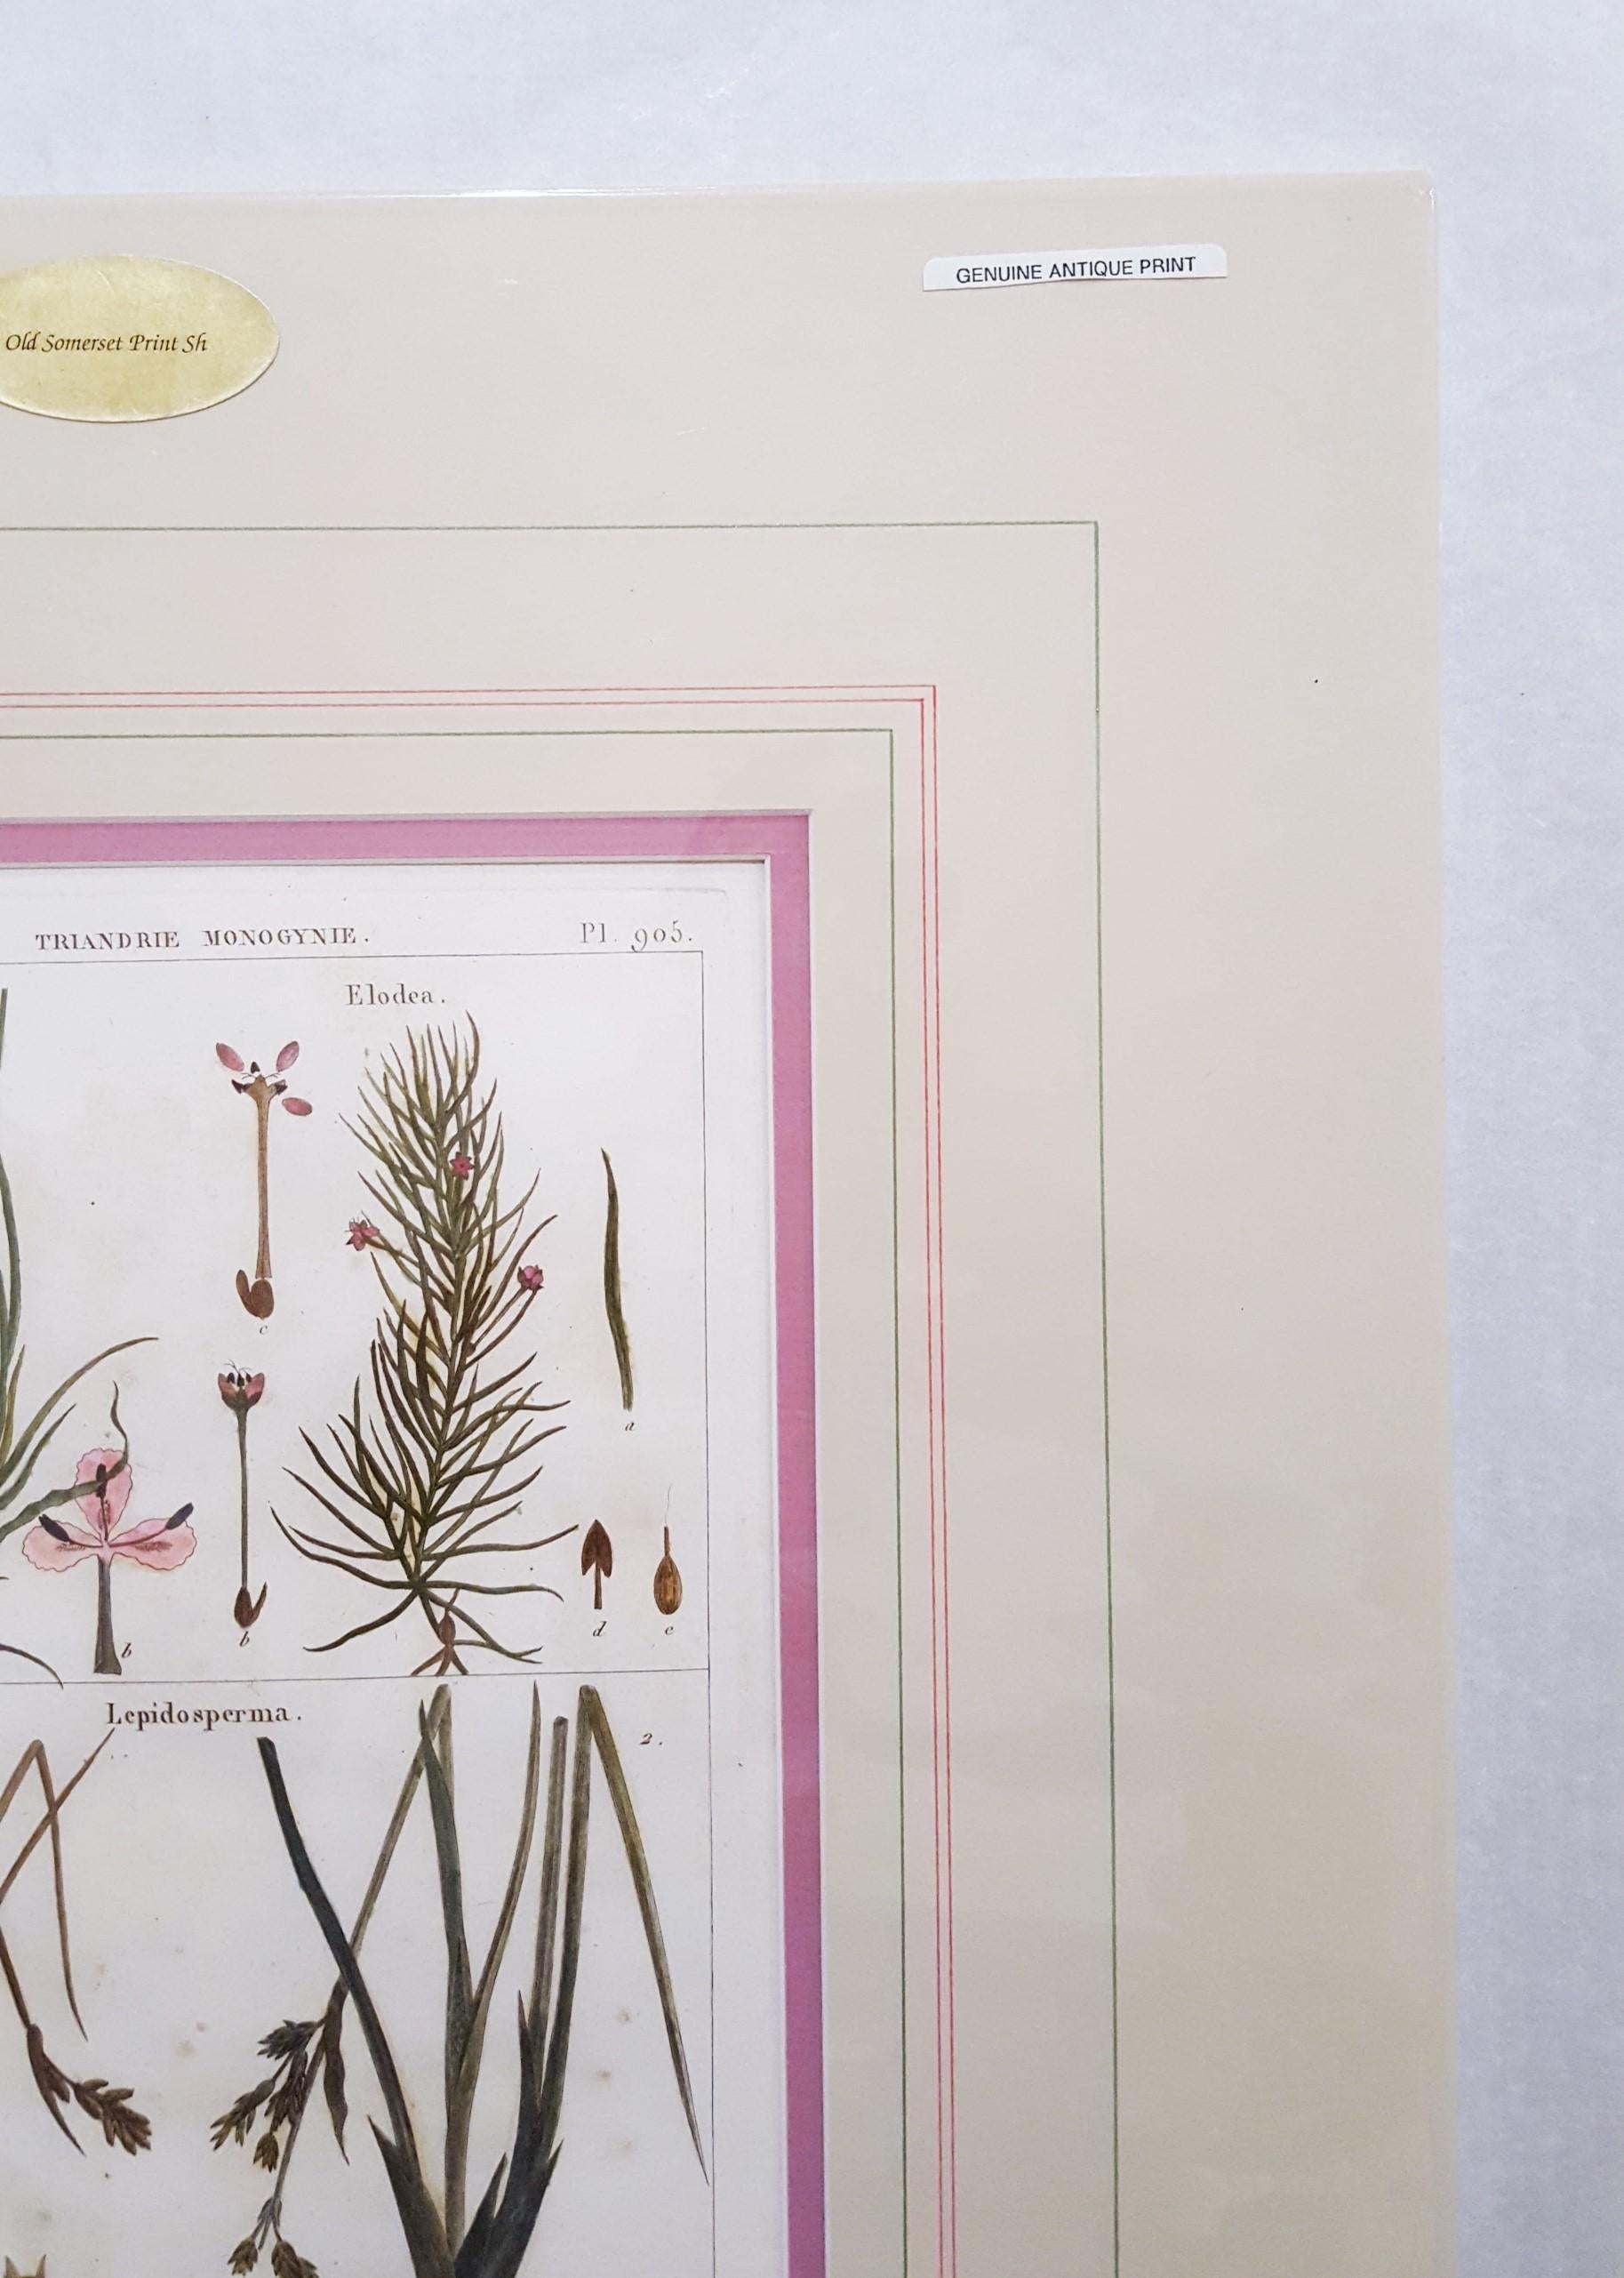 Abolboda ; Elodea (Waterweeds), Lepidosperma (Hoary Rapier-Sedge) /// Botanical  - Gris Still-Life Print par Georges-Louis Leclerc, Comte de Buffon